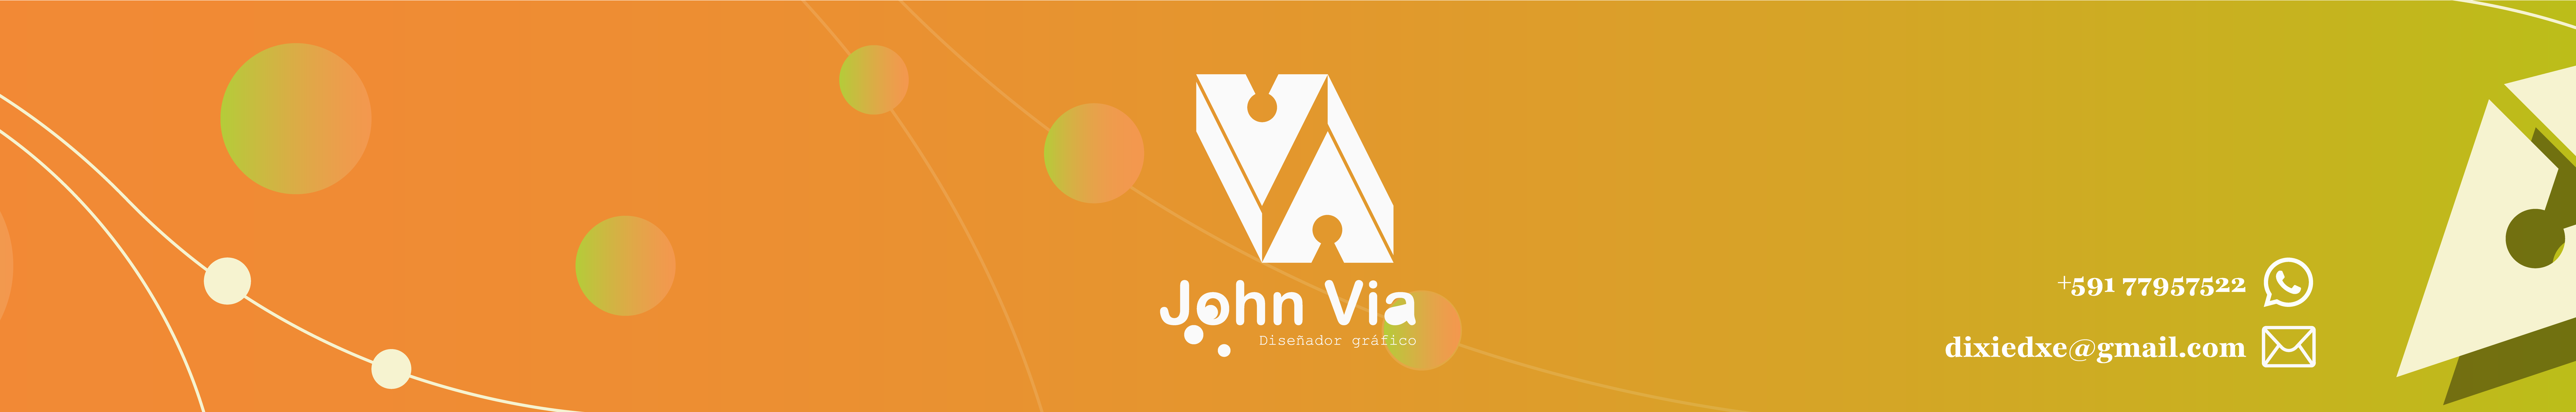 Bannière de profil de John Via